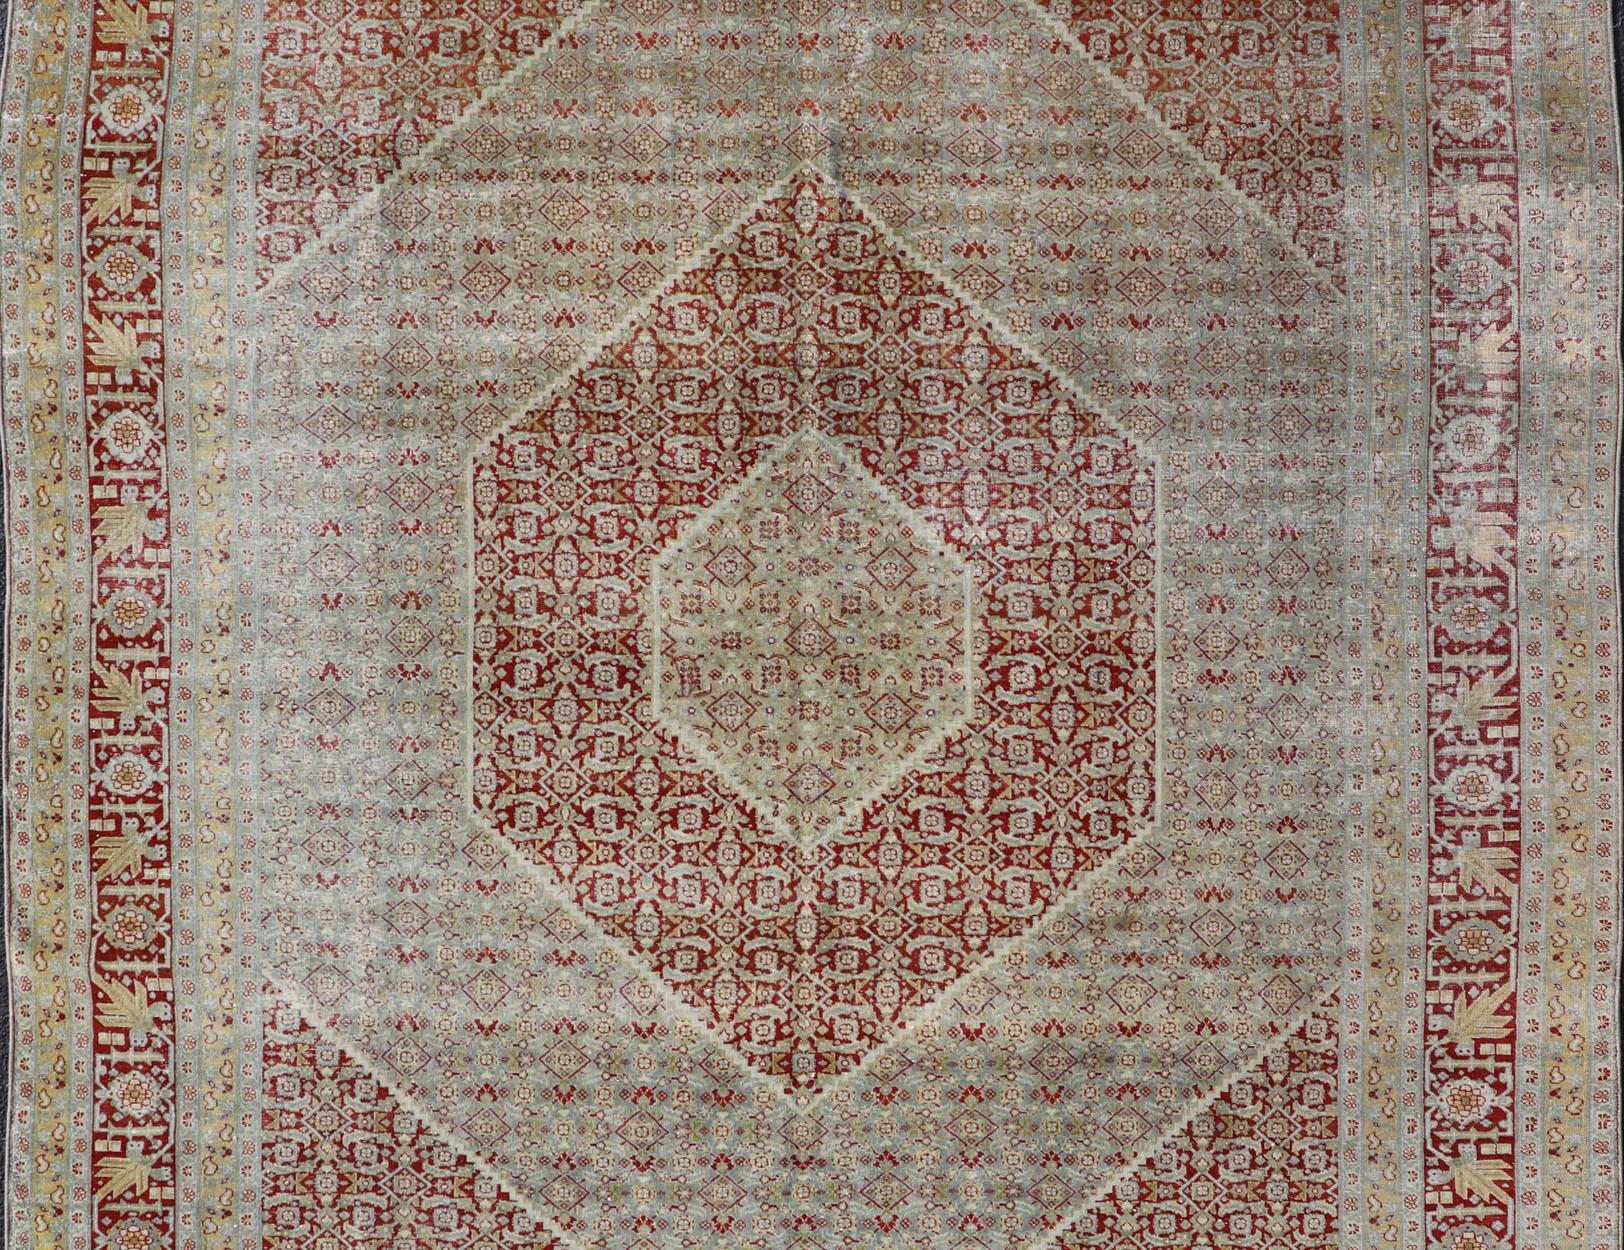 Antique Persian Tabriz Distressed Carpet with Geometric Diamond Design For Sale 5